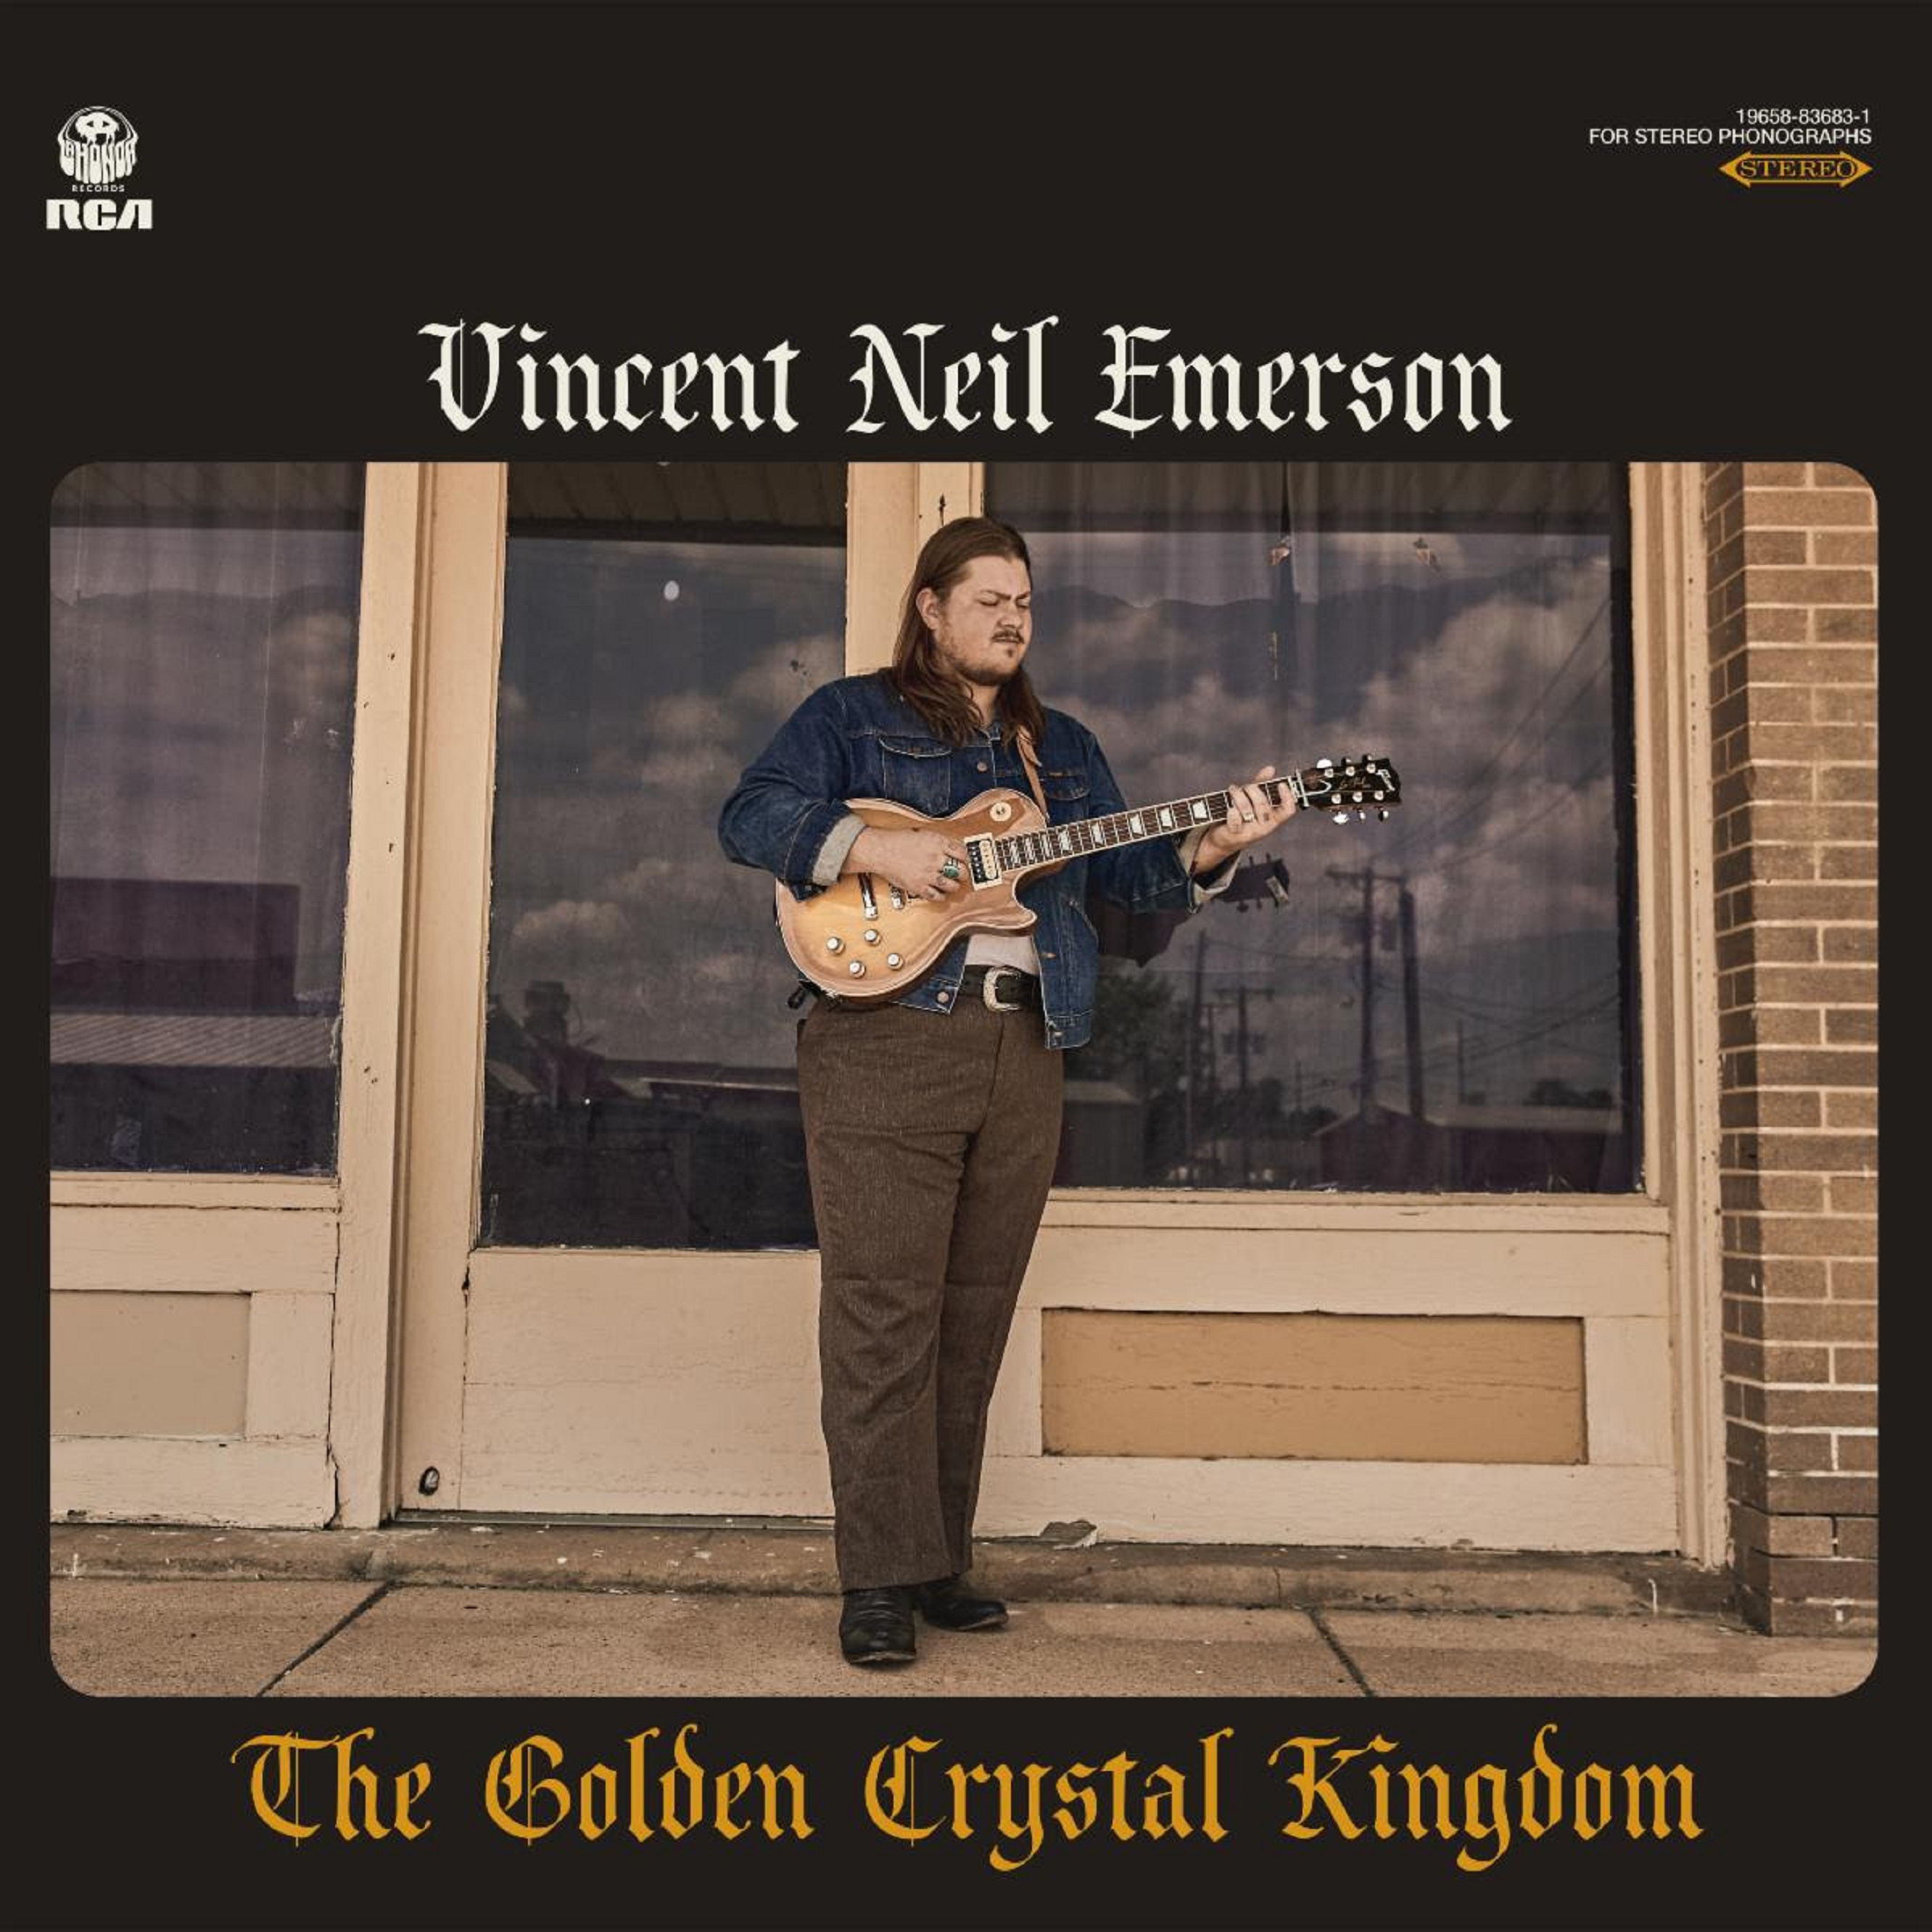 Vincent Neil Emerson Announces New Shooter Jennings’ Produced Album, The Golden Crystal Kingdom